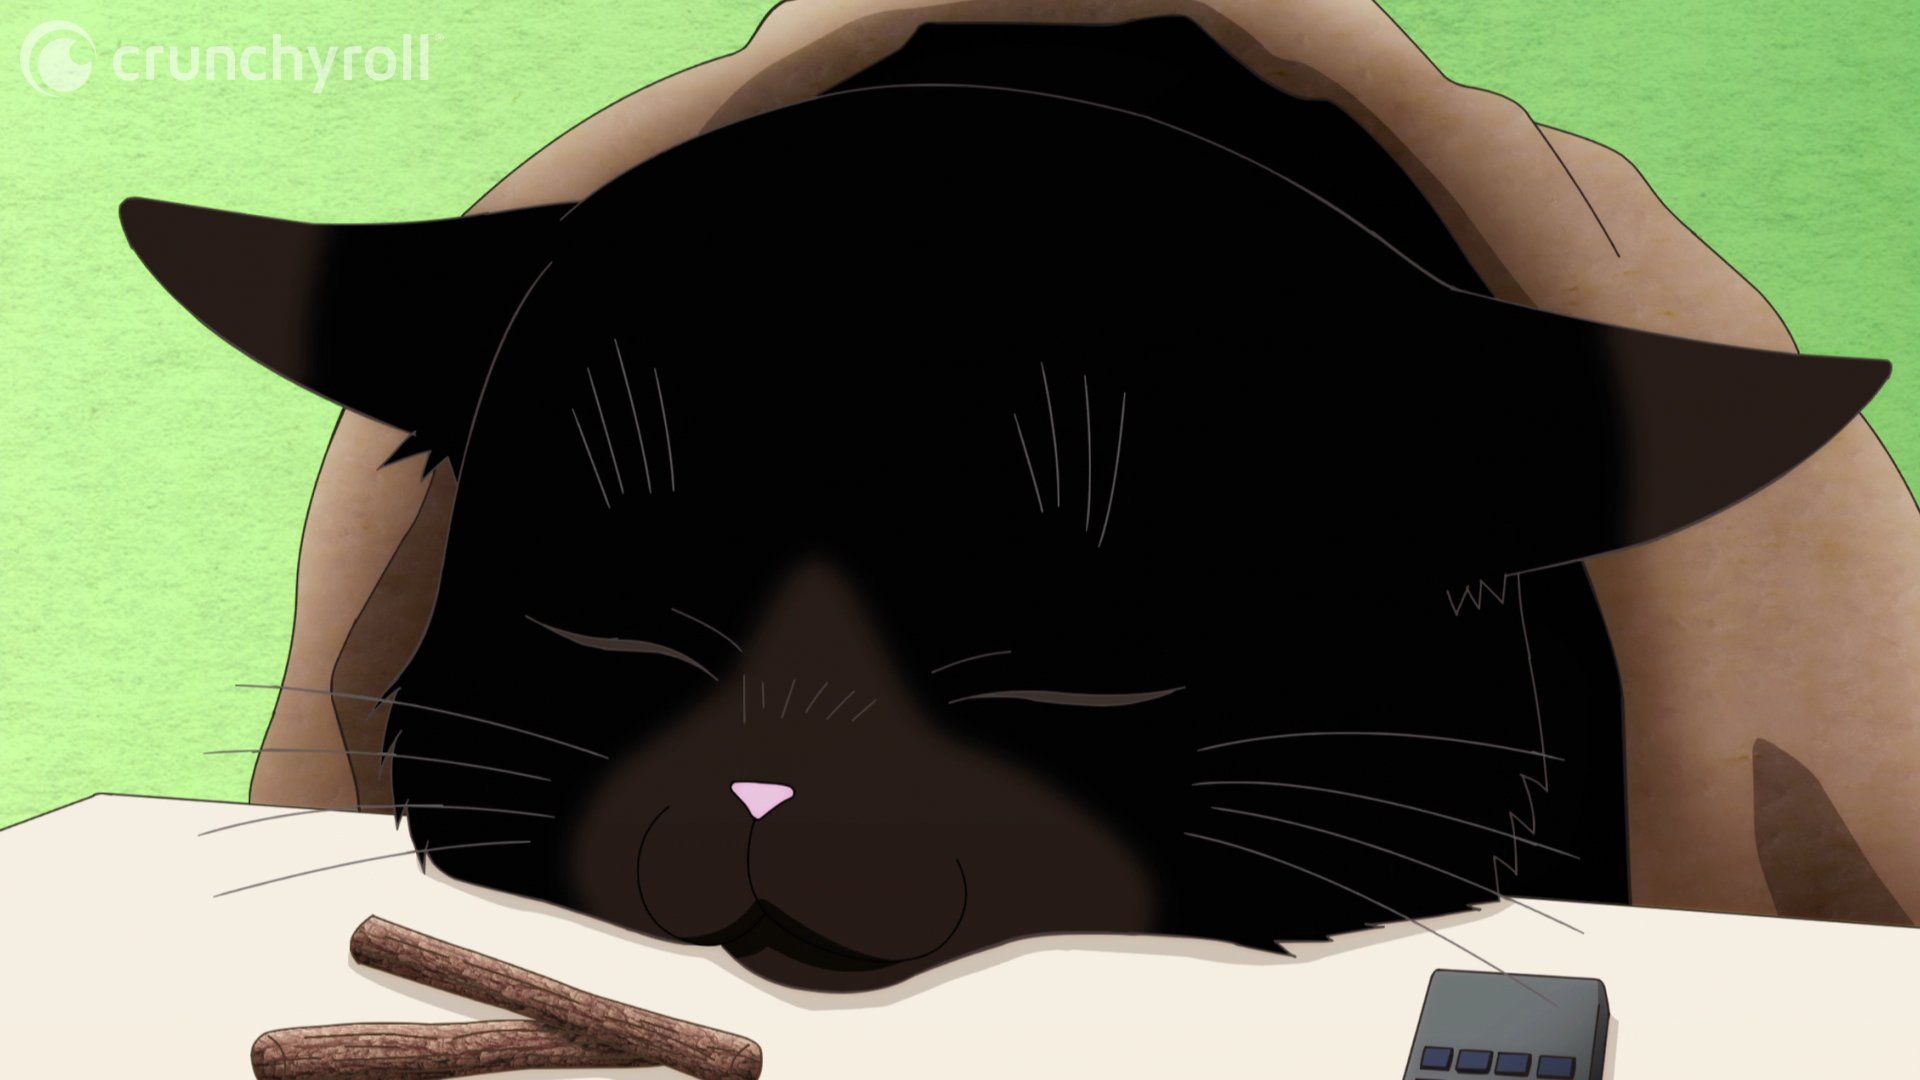 Crunchyroll - Who remembers Black Cat? 👀